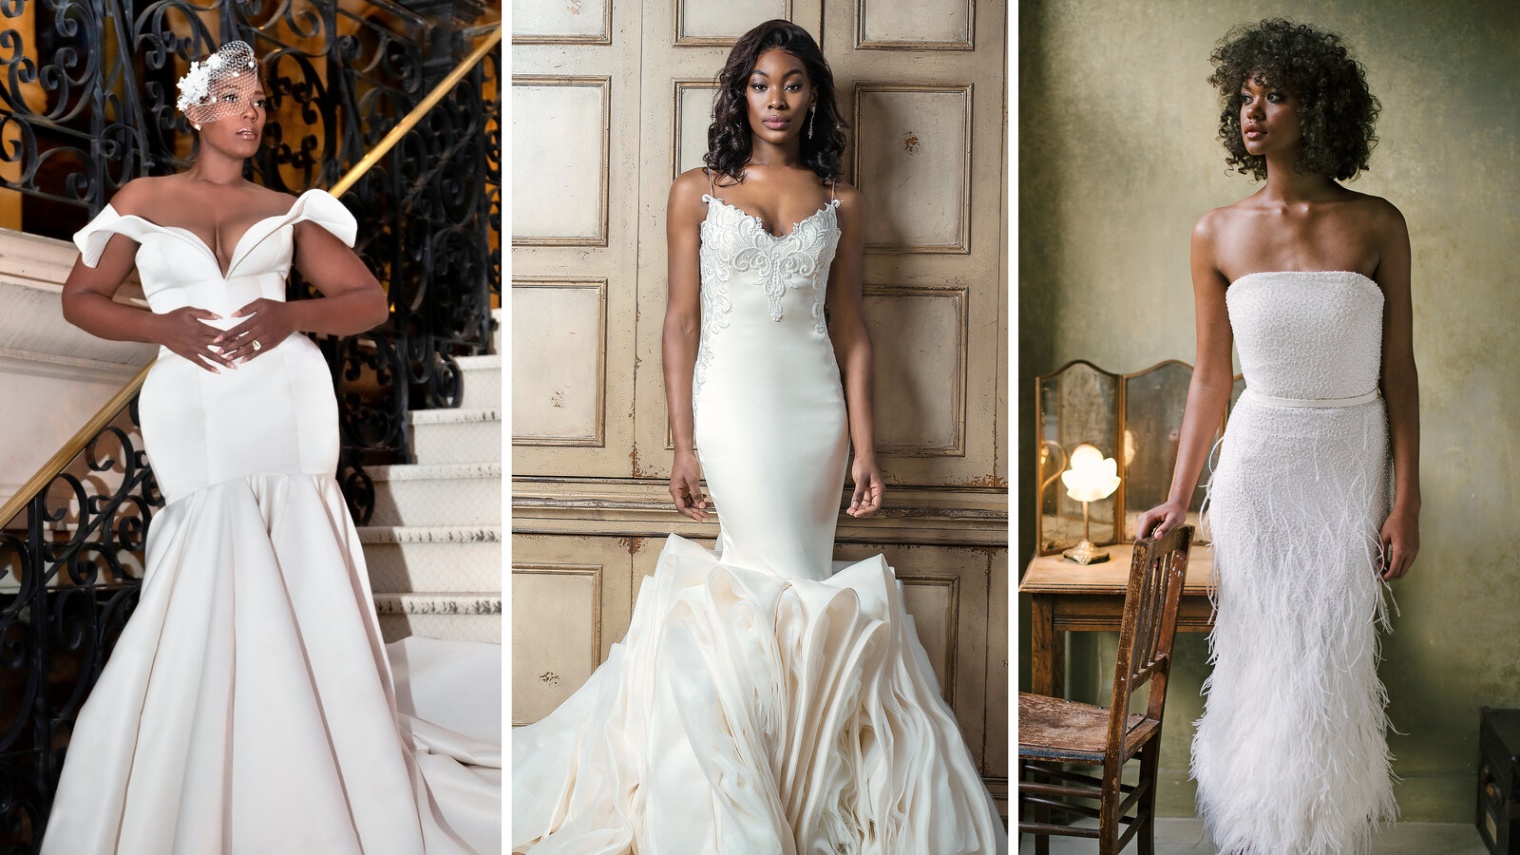 black wedding dress designer Bulan 1 Get to Know These Black Bridal Designers - The New York Times